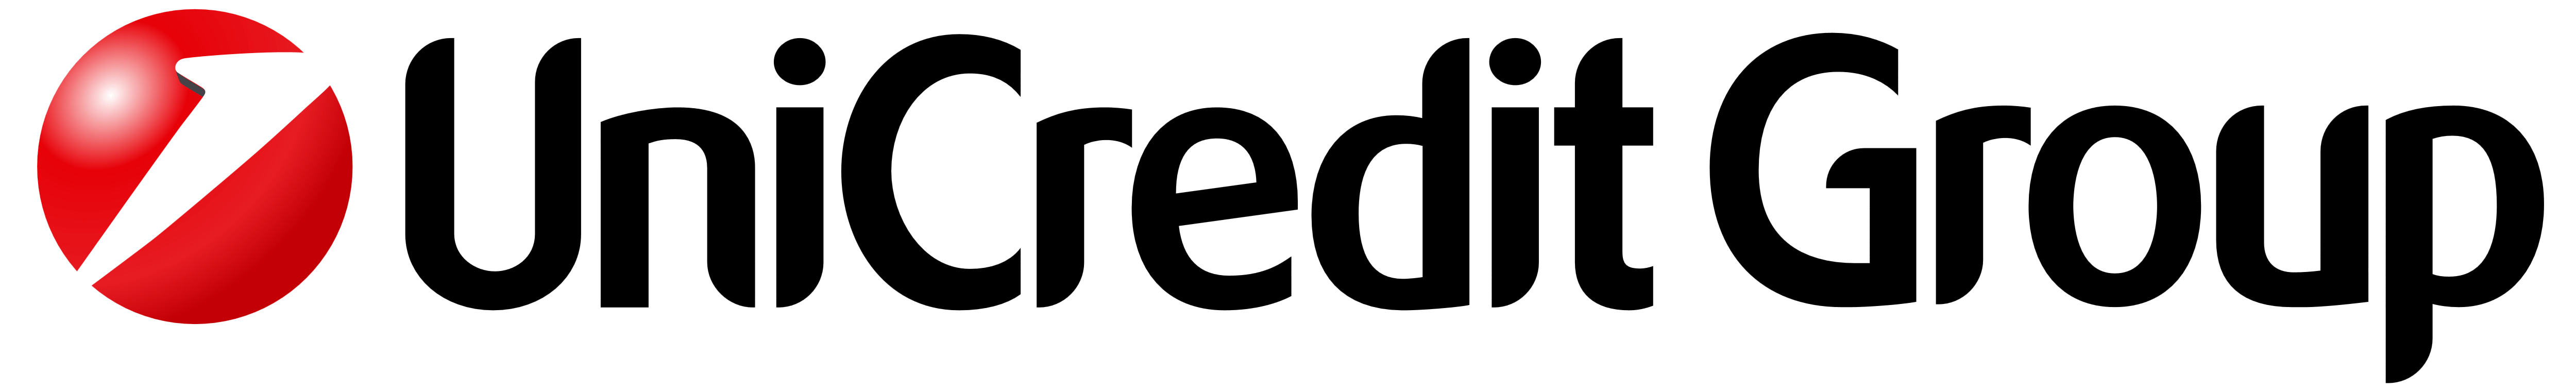 UniCredit Logo - UniCredit – Logos Download